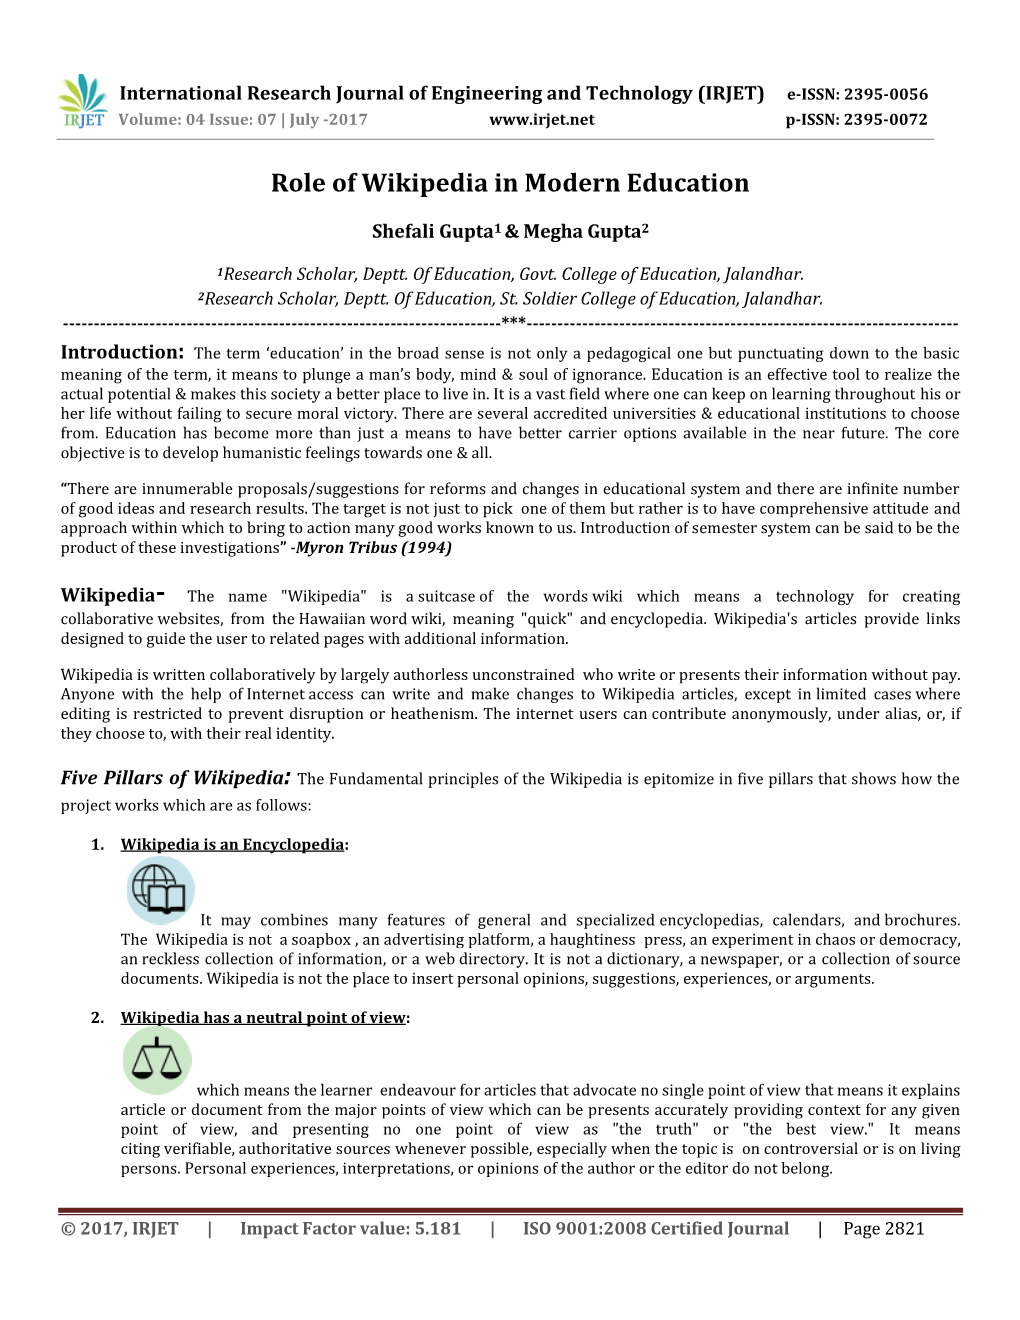 Role of Wikipedia in Modern Education